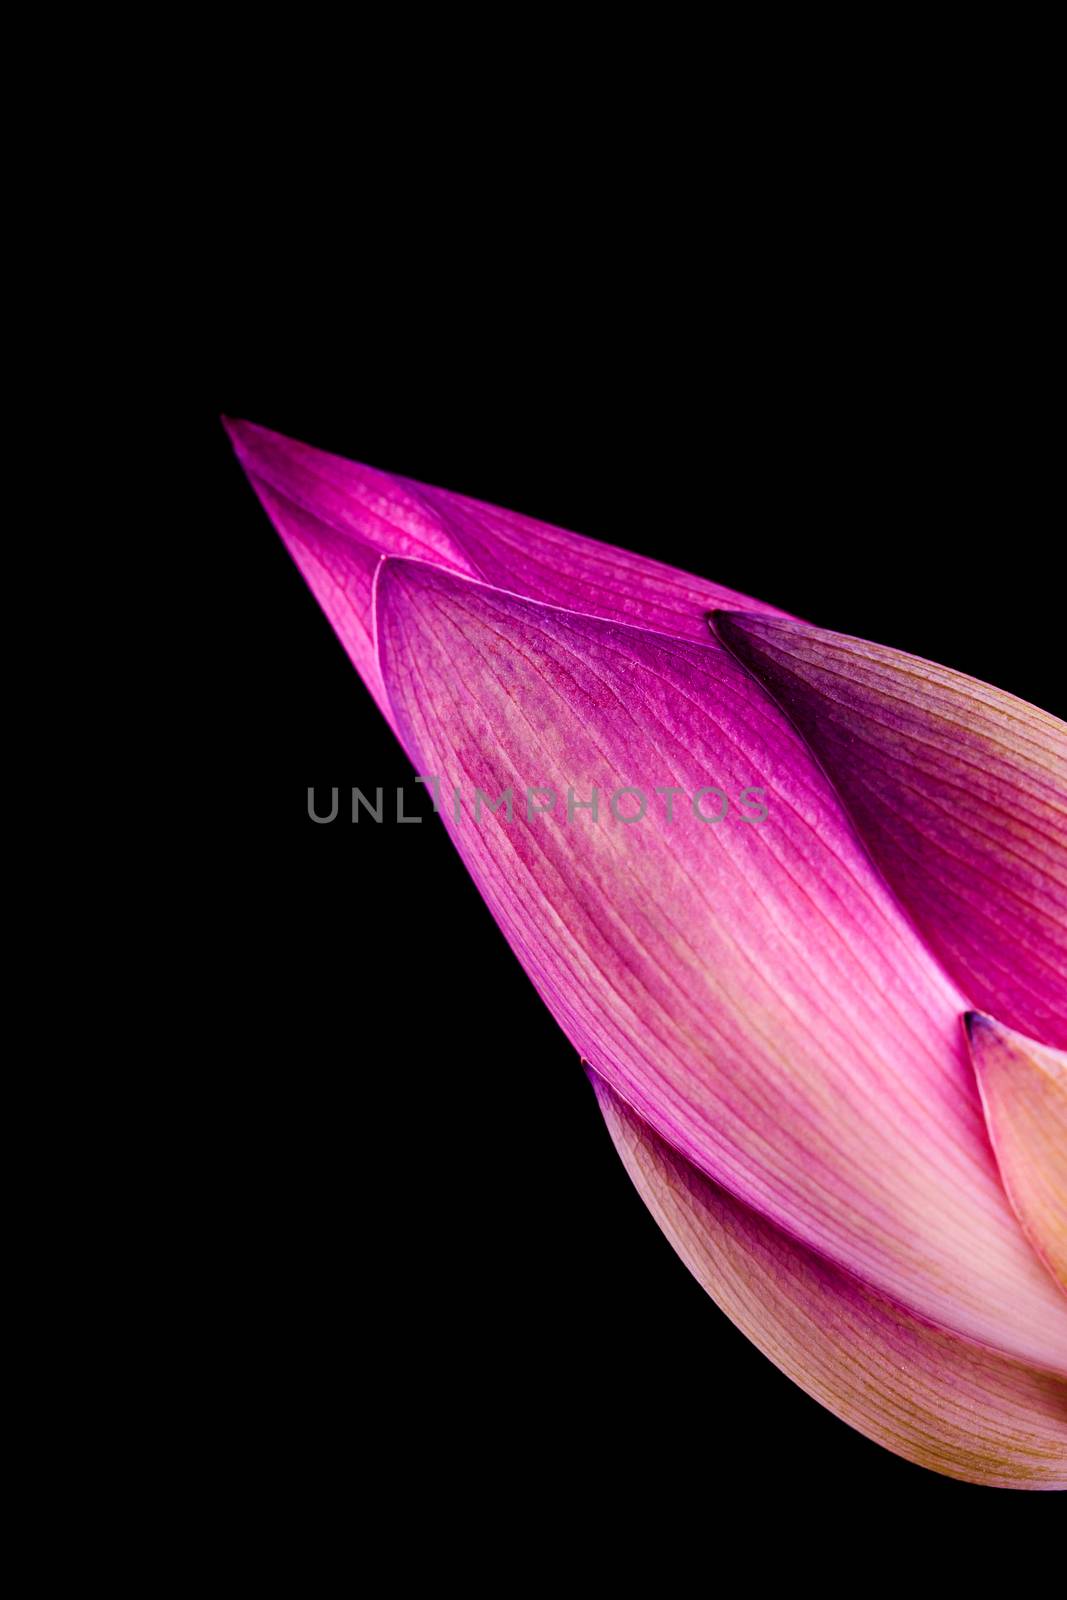 lotus flower isolated on Black background by freedomnaruk